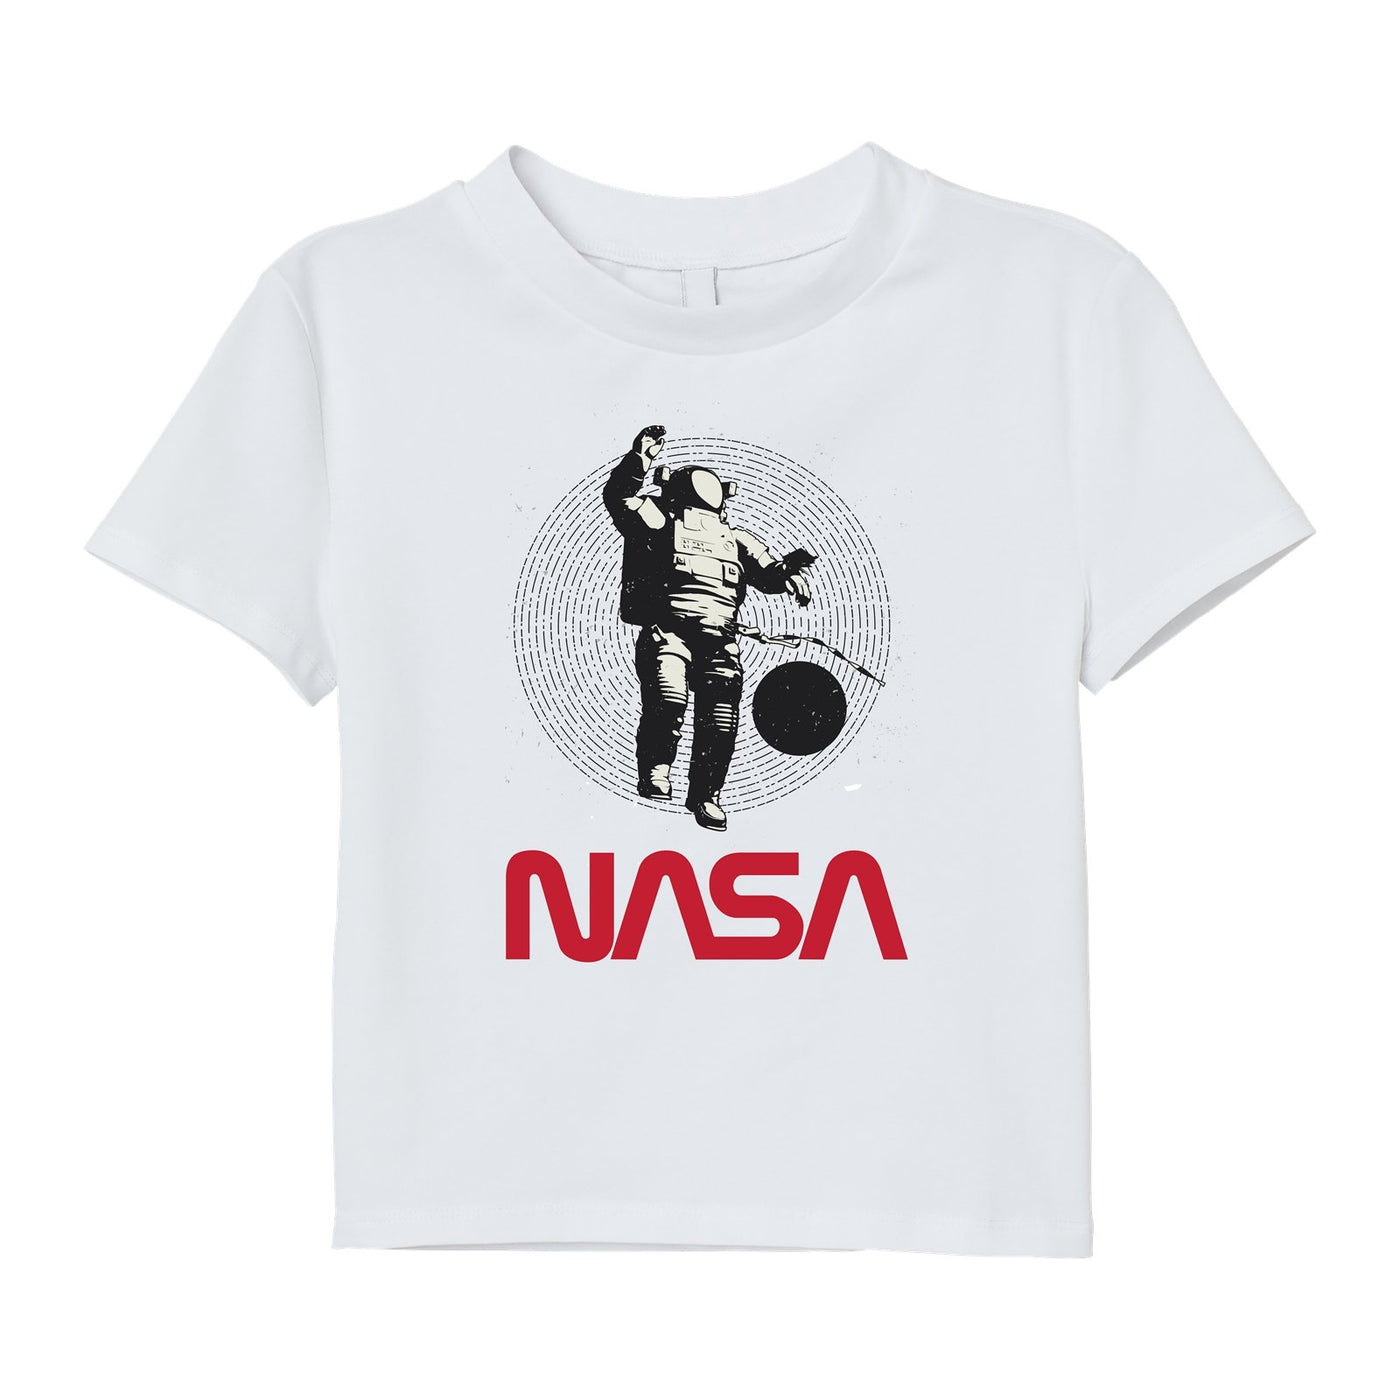 Bild: T-Shirt Kinder - NASA Astronaut (Retro) Geschenkidee